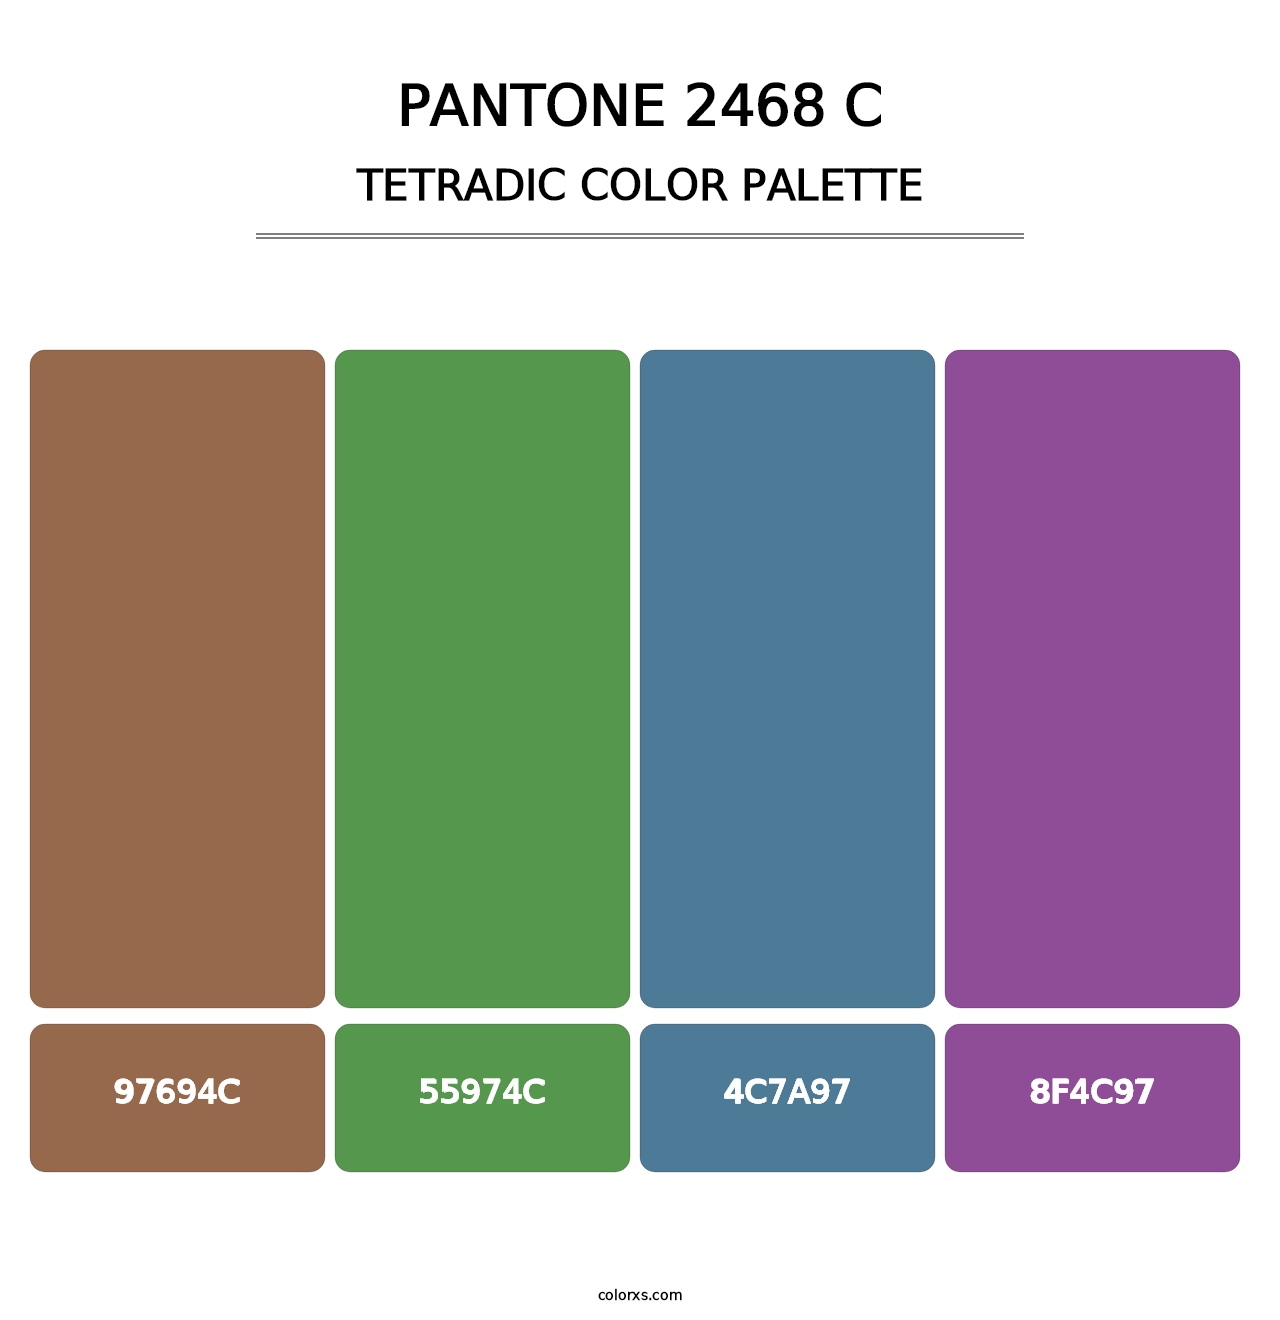 PANTONE 2468 C - Tetradic Color Palette